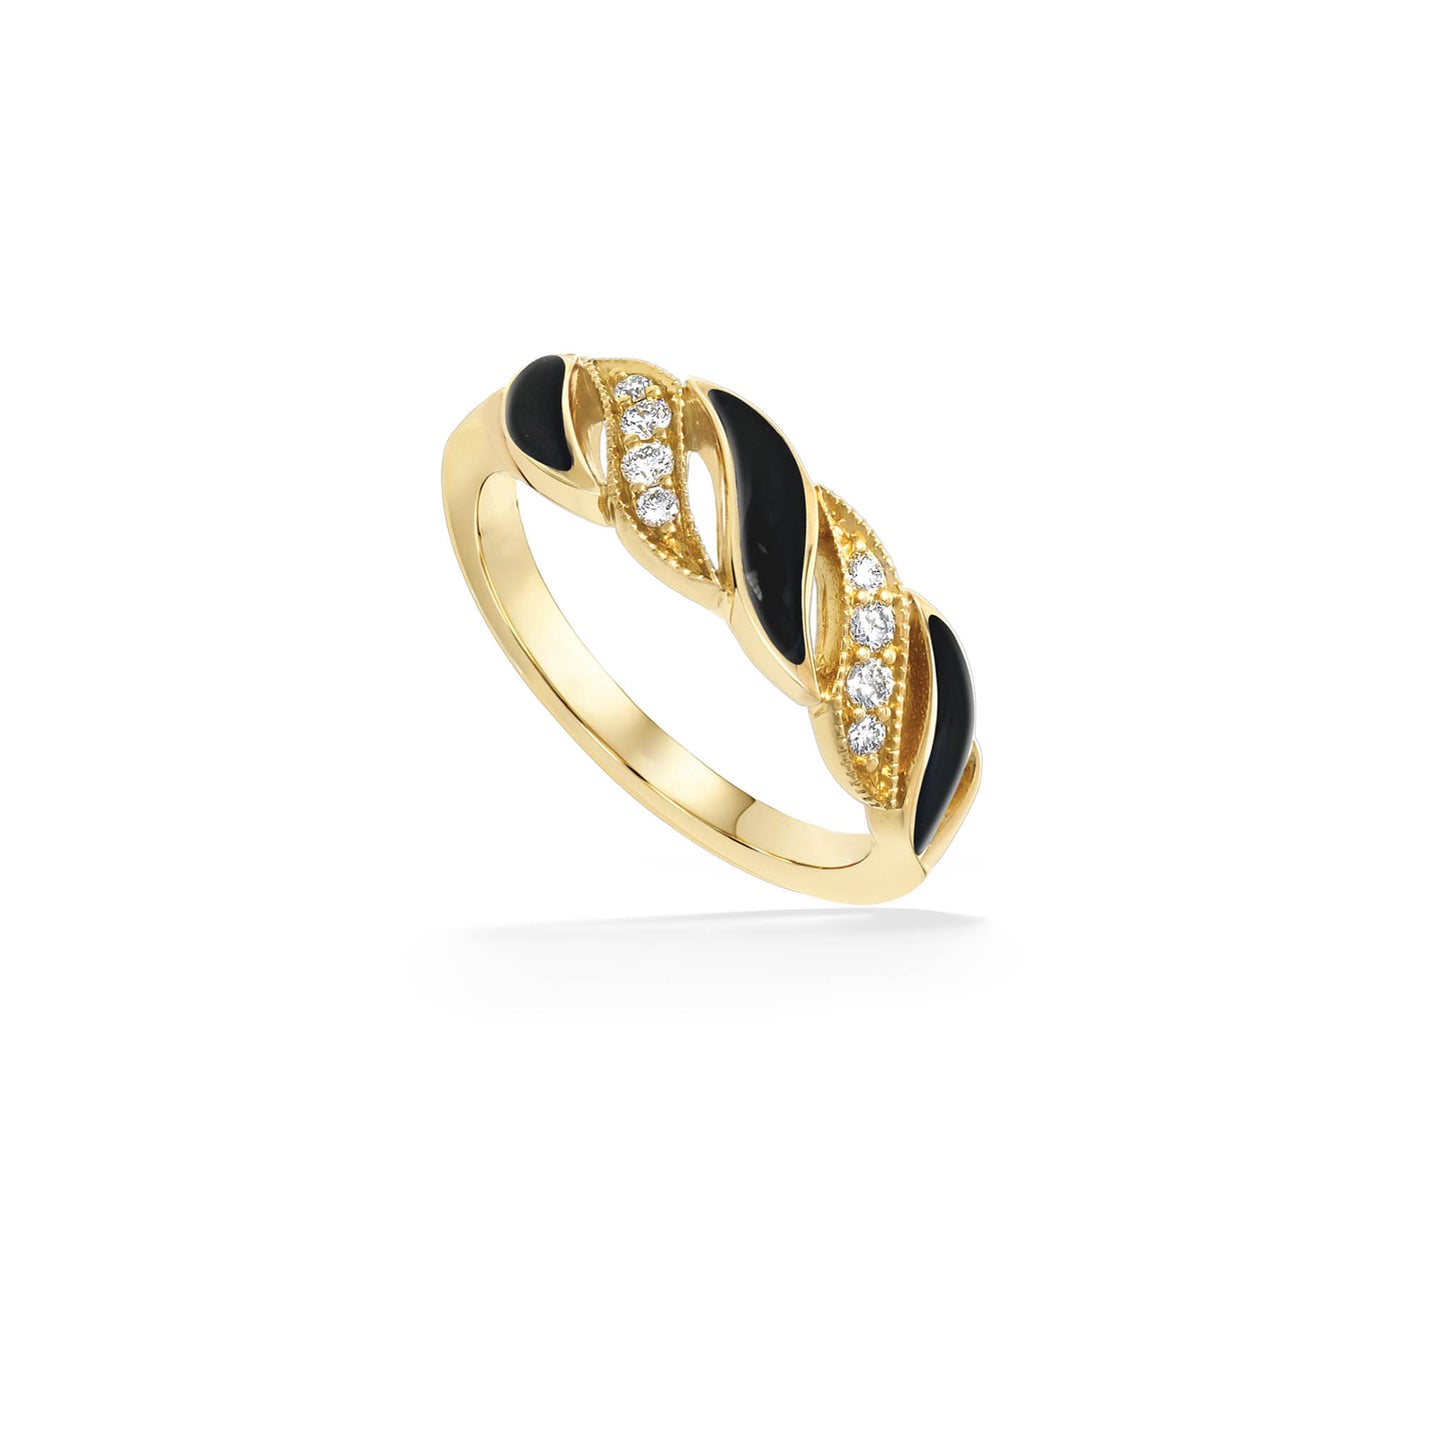 767611 - 14K Yellow Gold - Kabana Inlay Ring